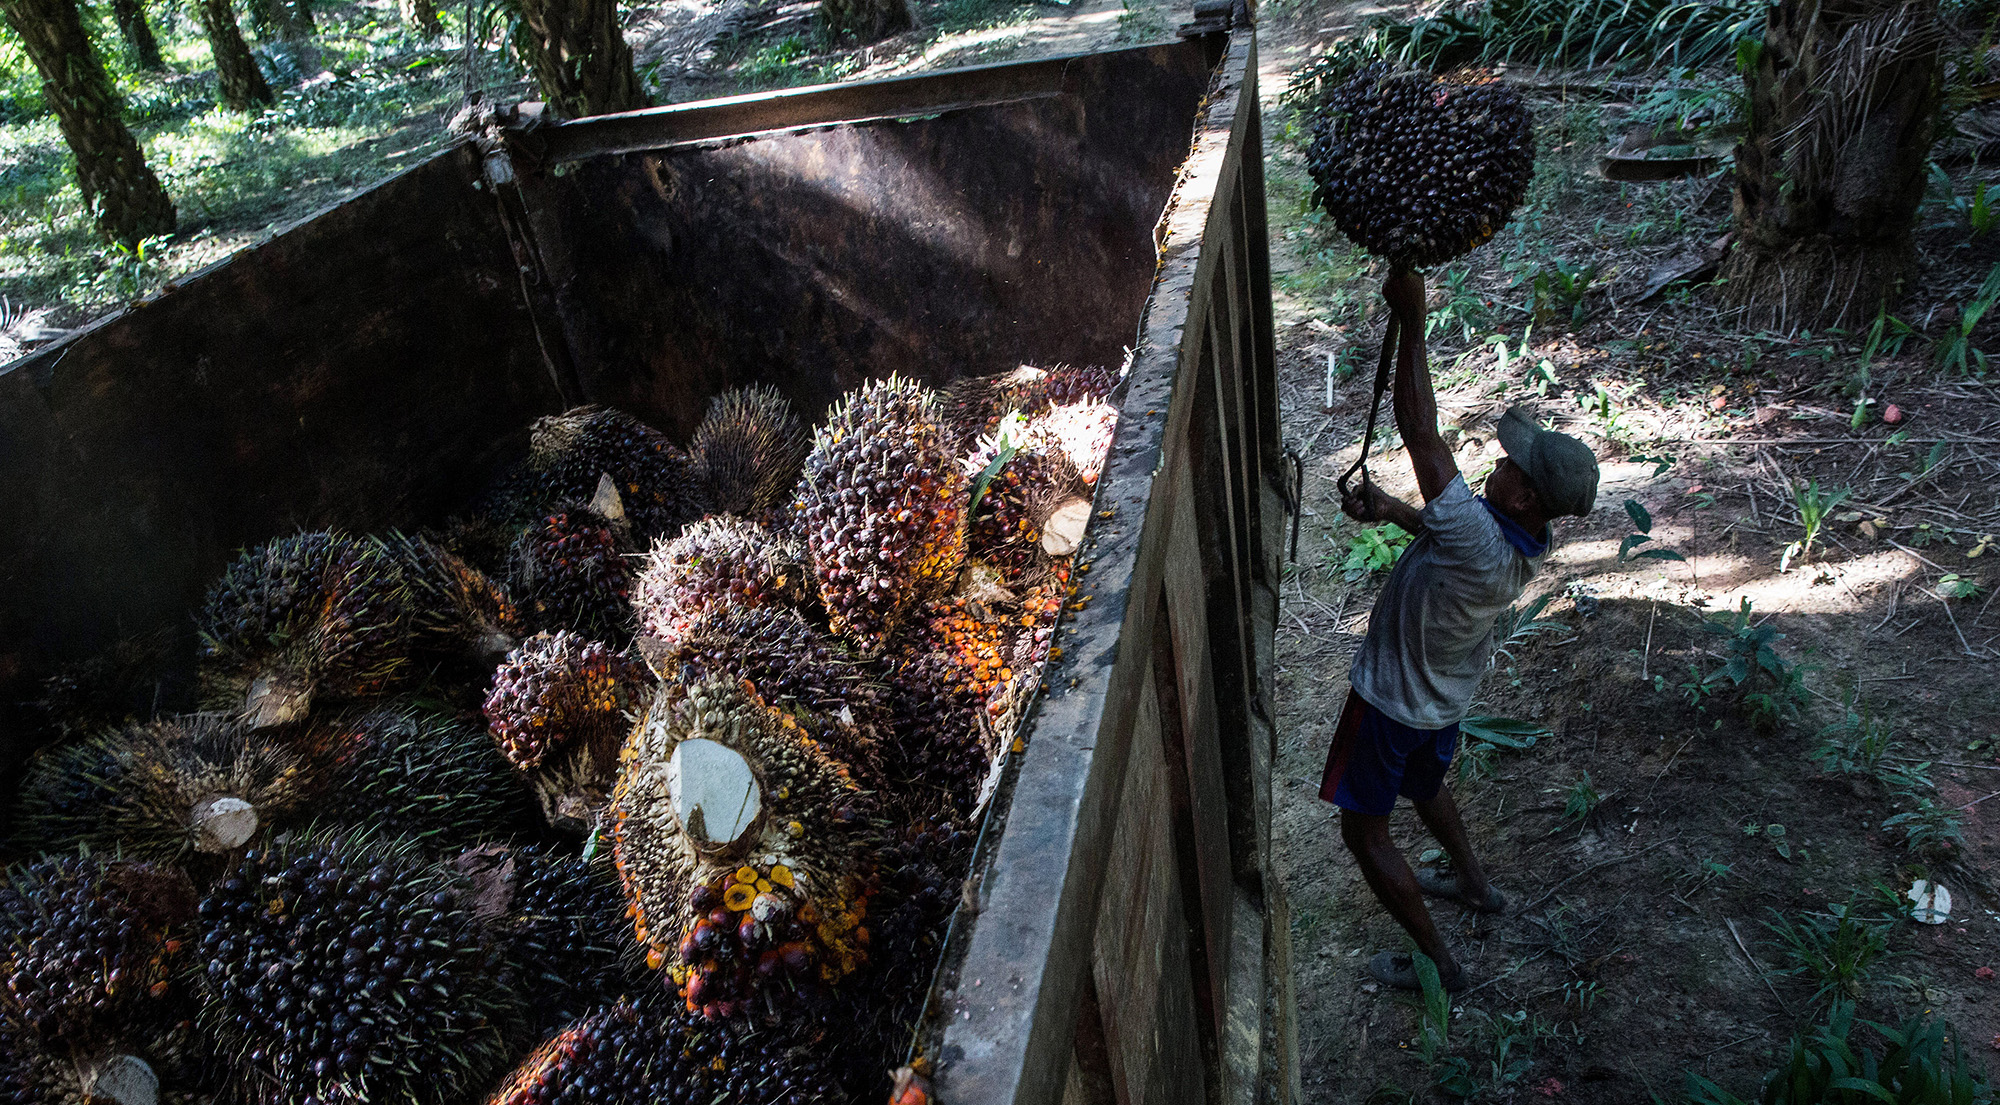 A worker loads a palm oil fruit bunch onto a truck near Kawthaung, Tanintharyi Region, Myanmar.